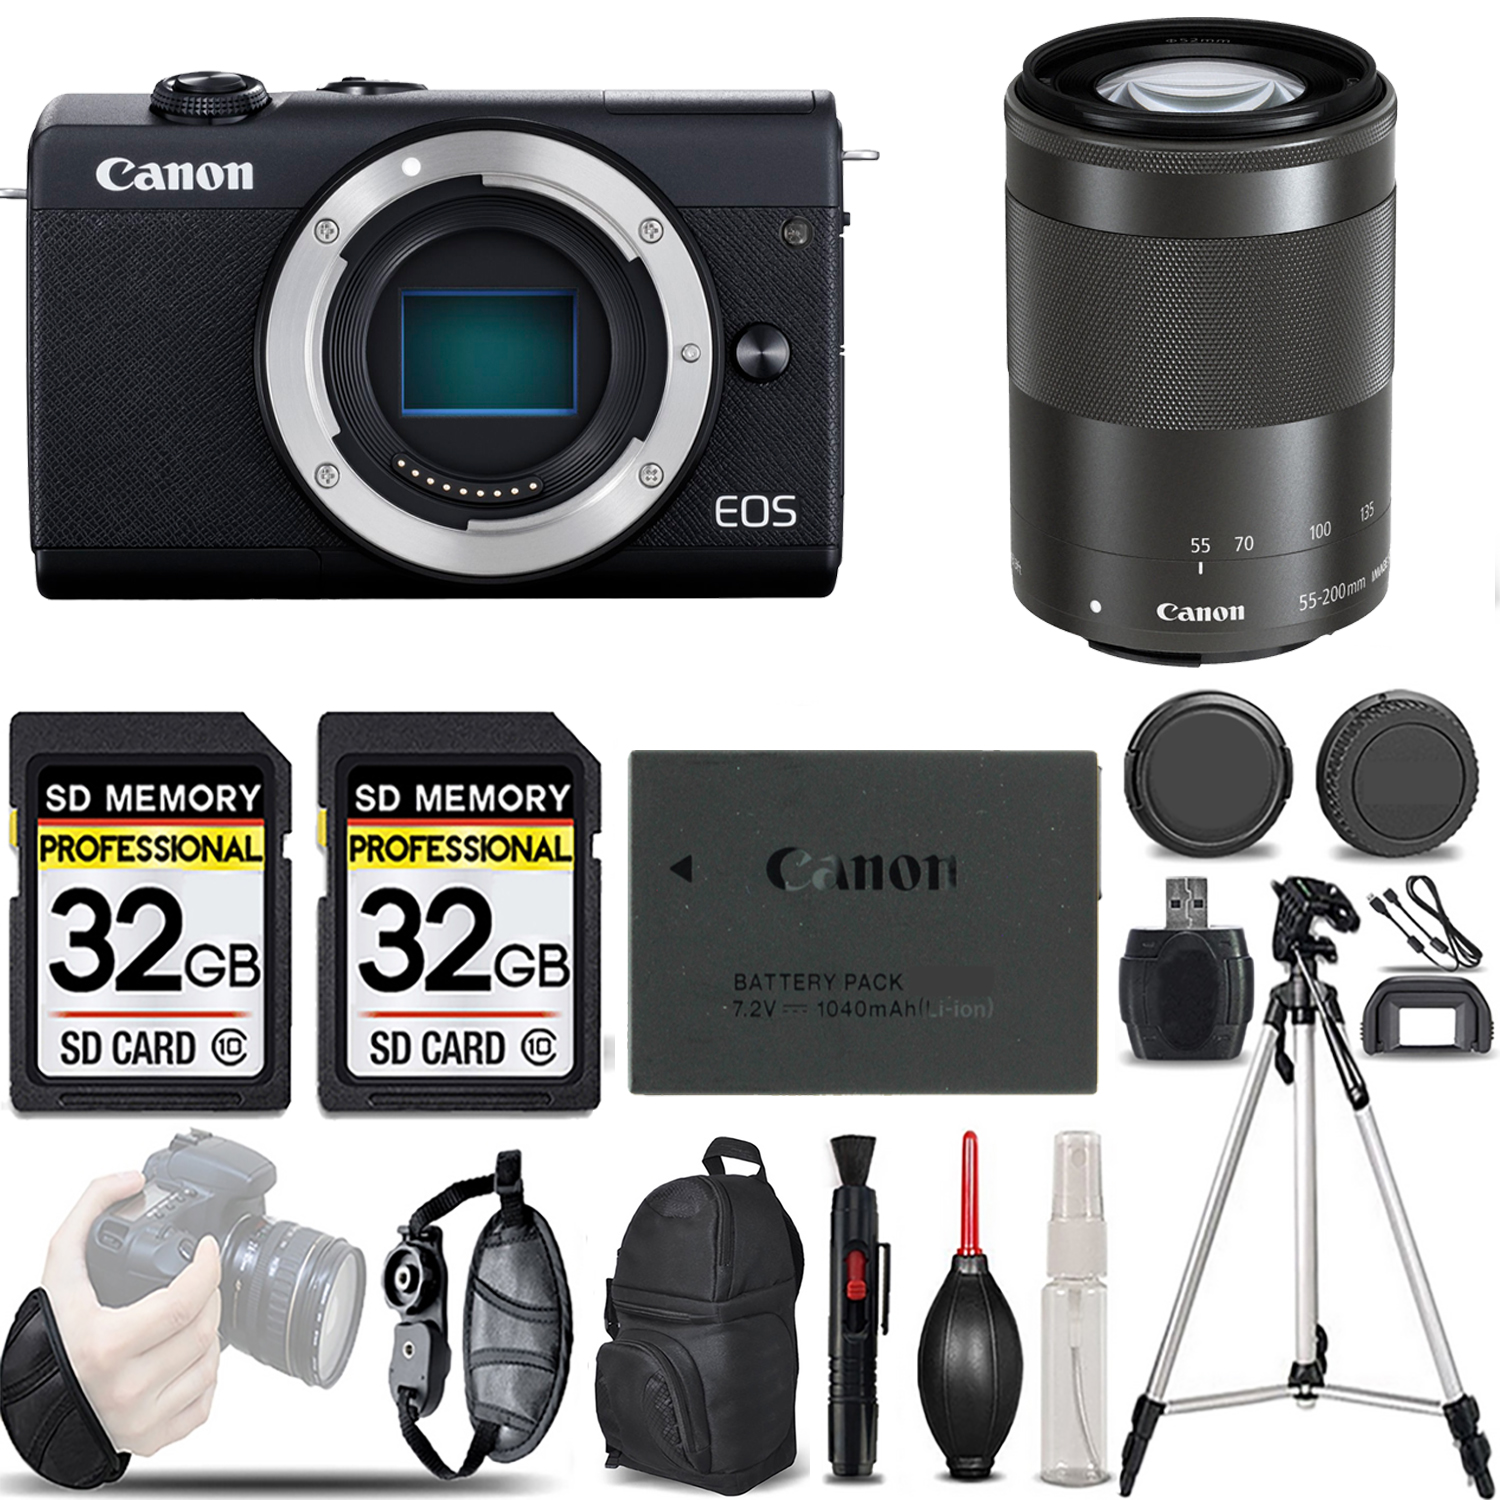 EOS M200  Camera (Black) + 55-200mm f/4.5-6.3 IS STM Lens (Black) - LOADED KIT *FREE SHIPPING*